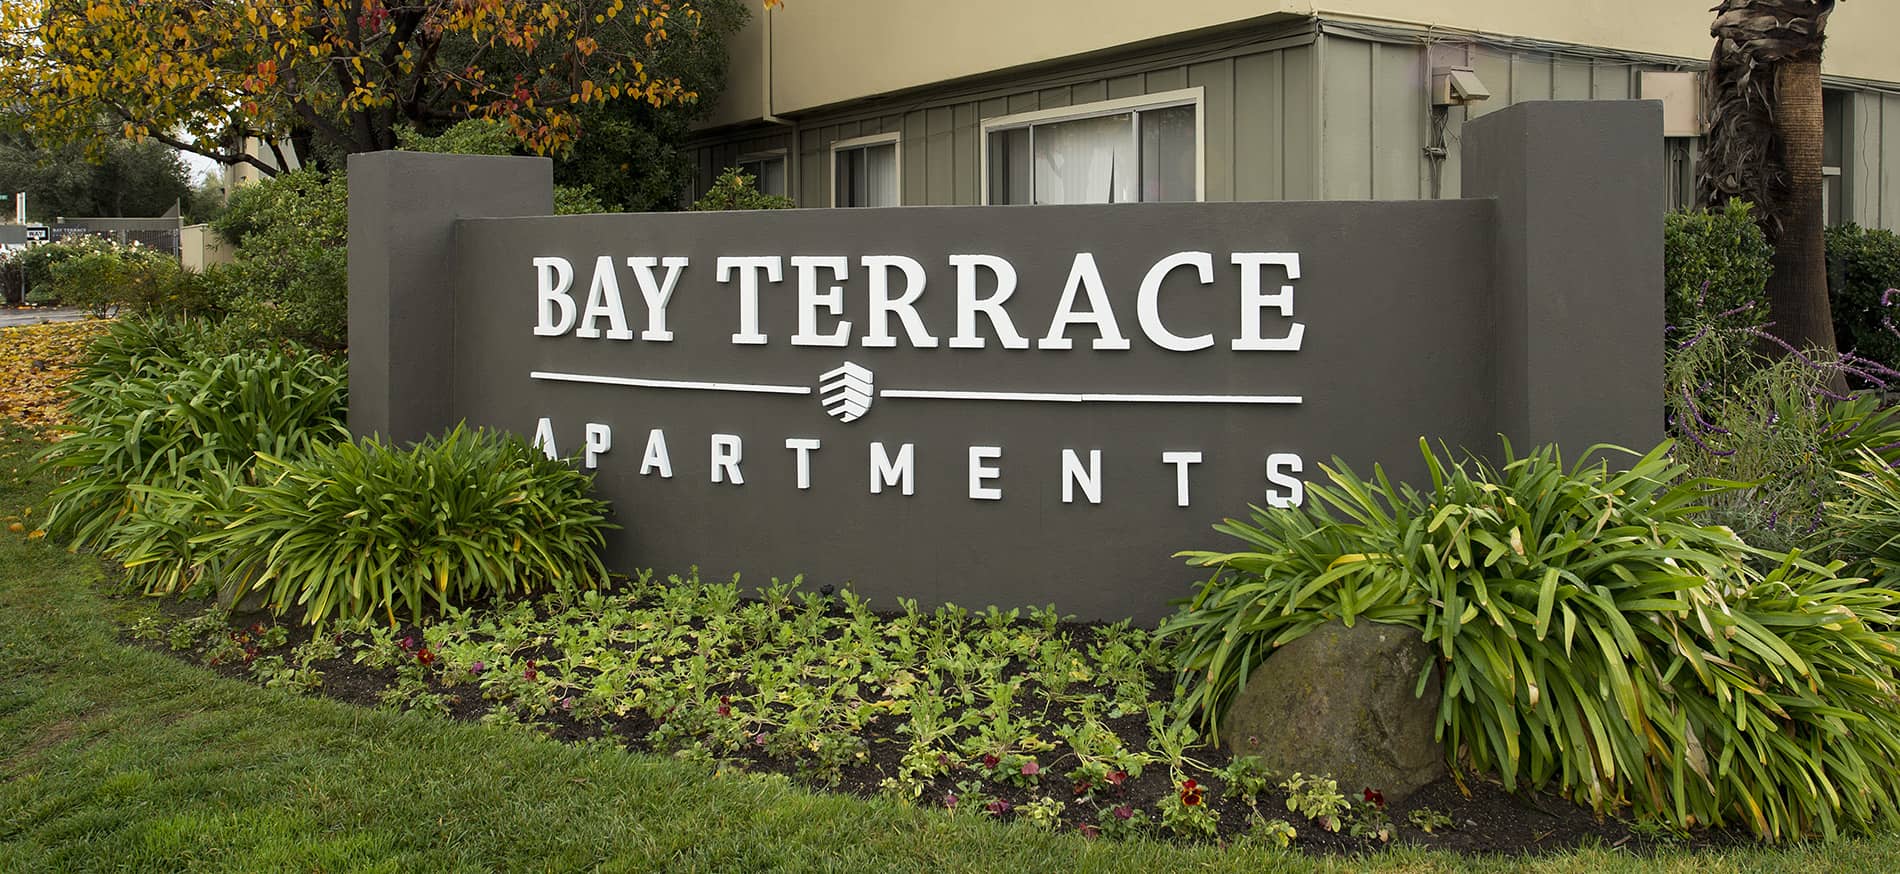 Bay Terrace Sign